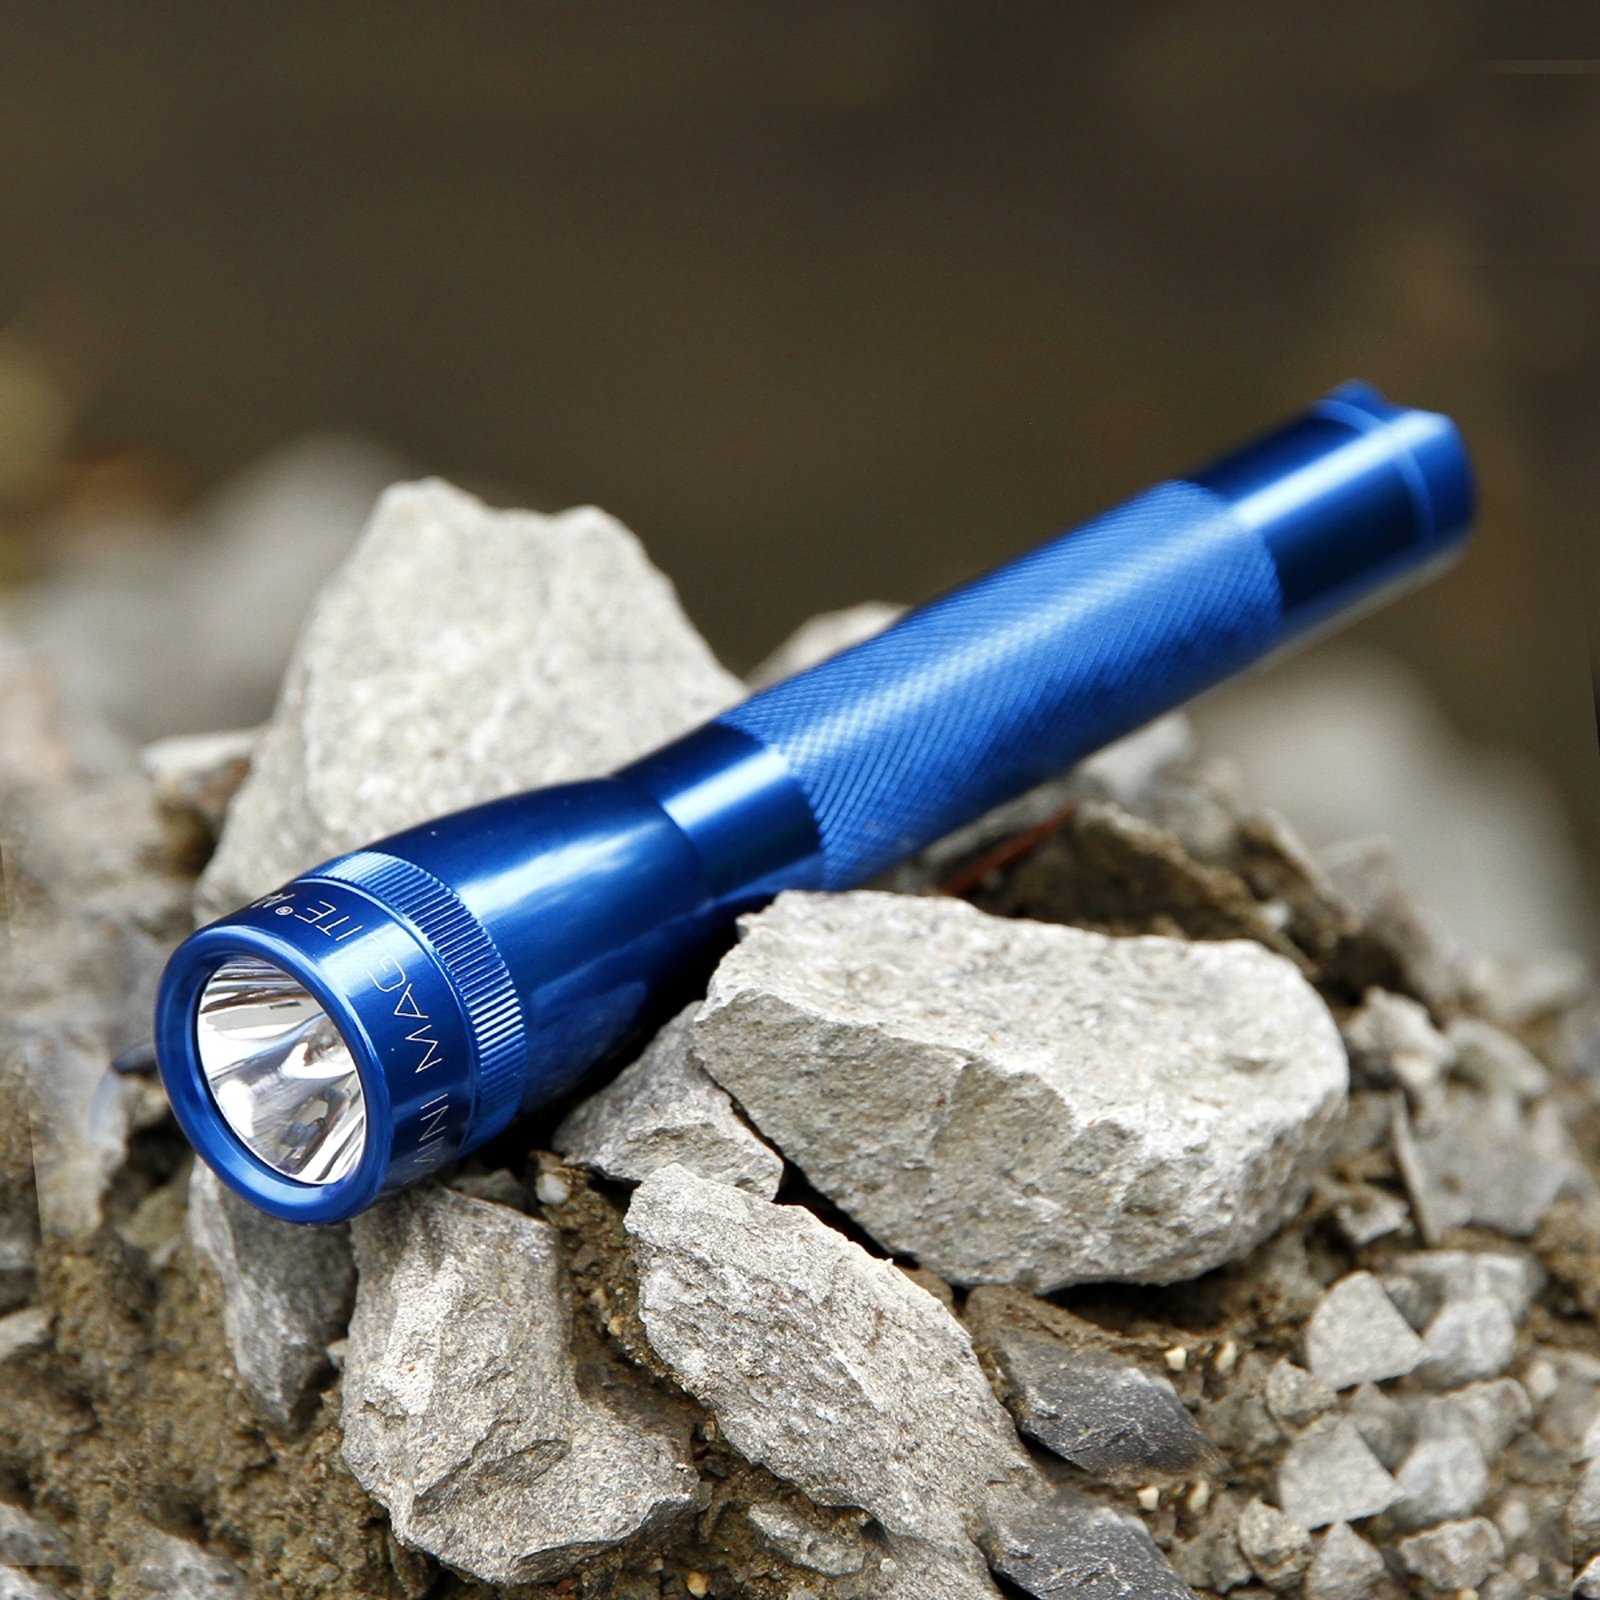 Maglite zaklamp Mini, 2 Cell AA, holster, blauw